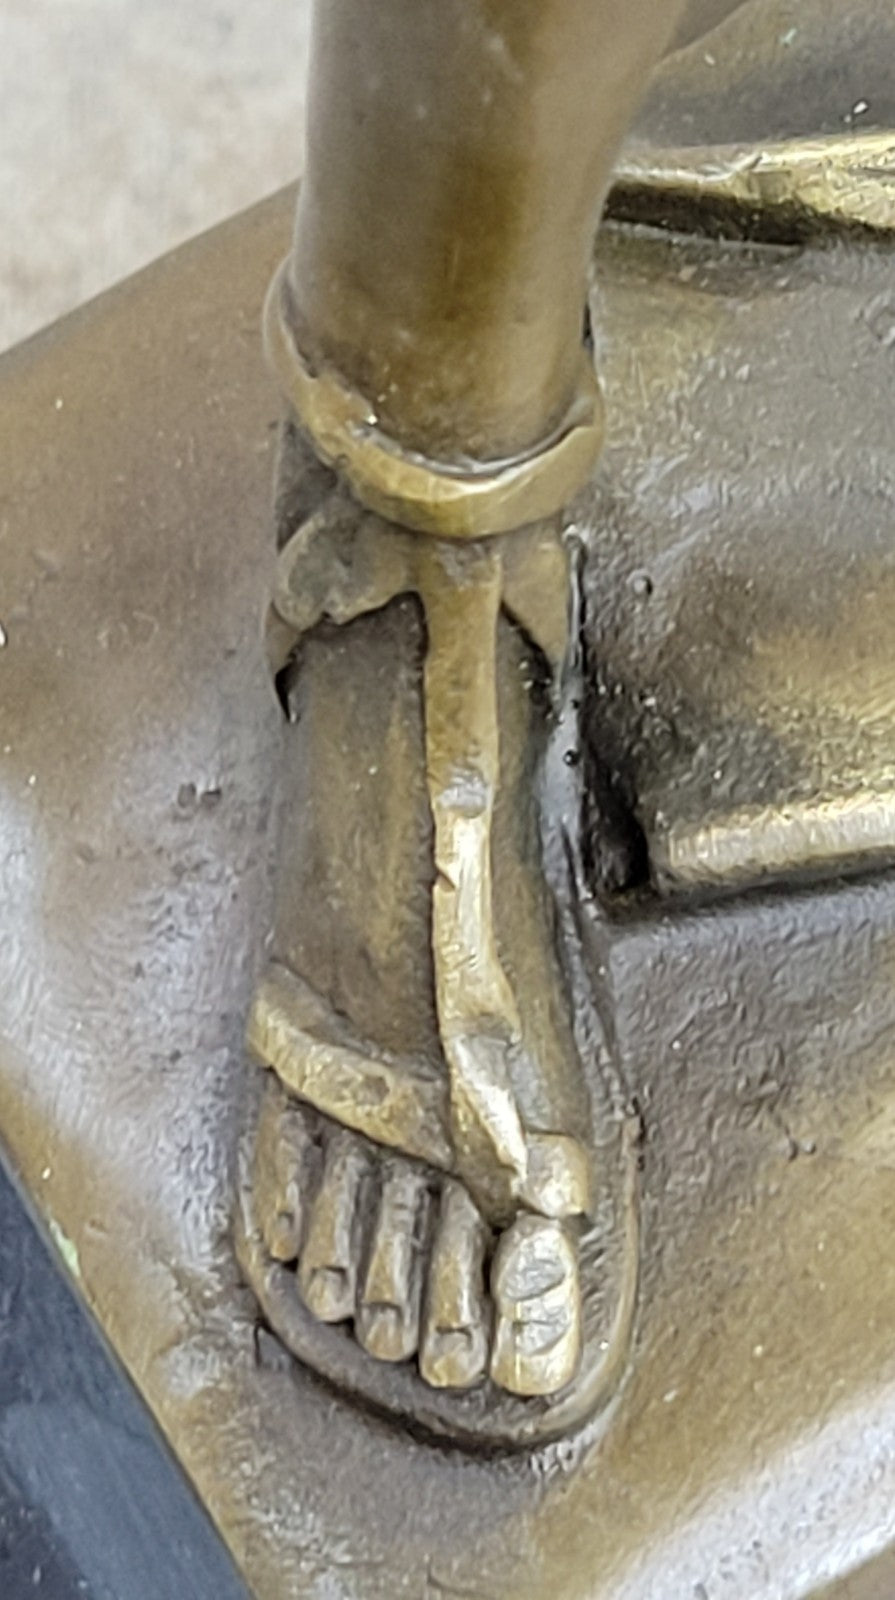 Handcrafted bronze sculpture SALE Nemorensis Diana Faguays Le Signed Deco Figure